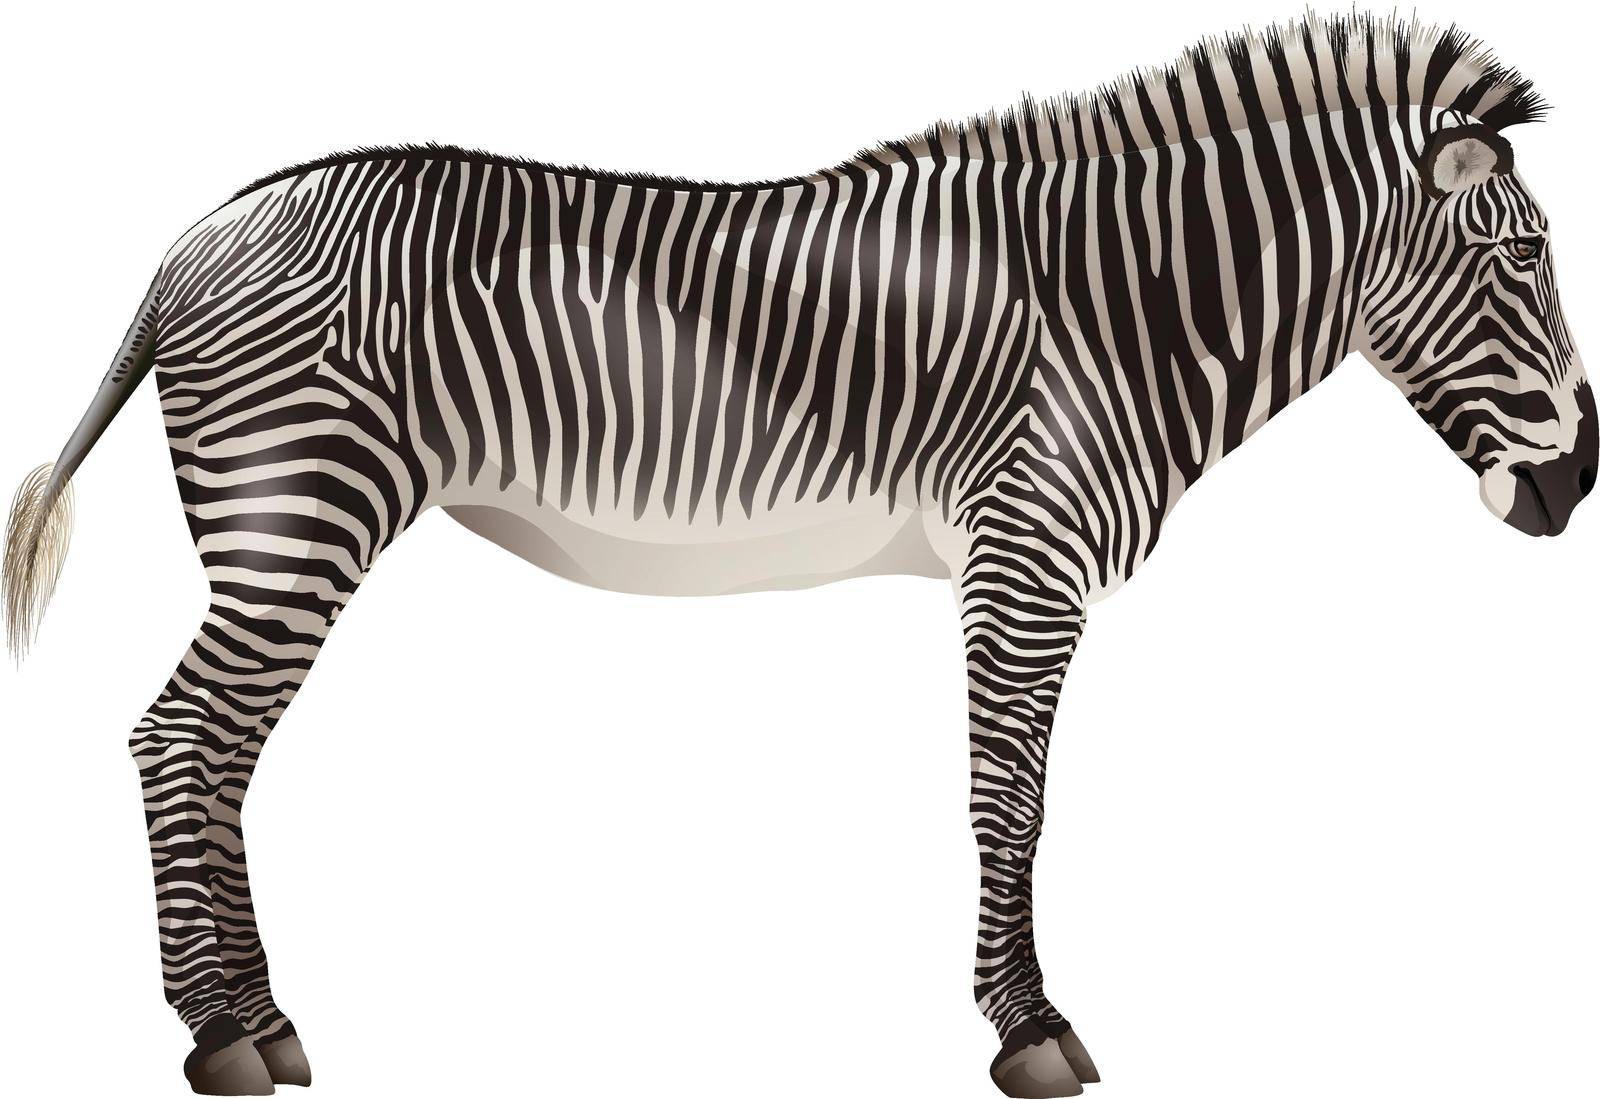 Illustration of a close up zebra